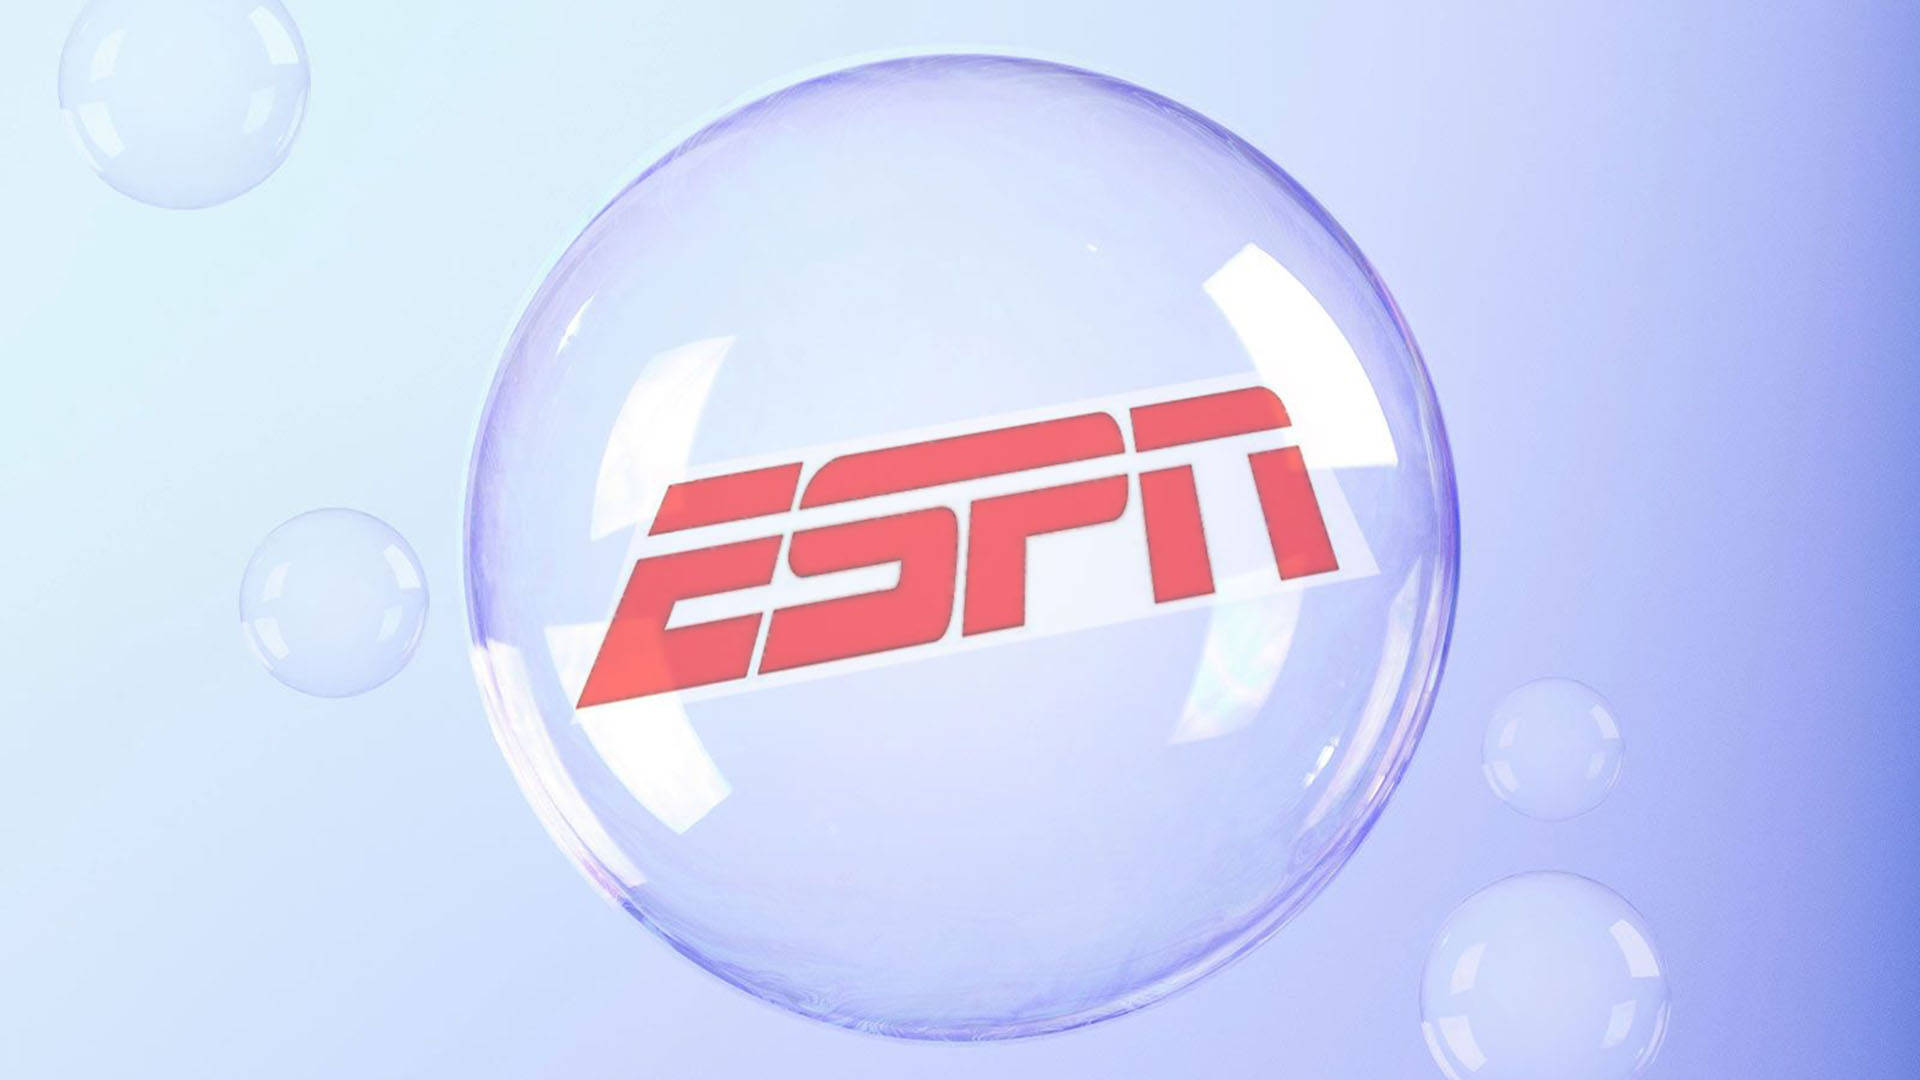 Espn Logo In Bubbles Background